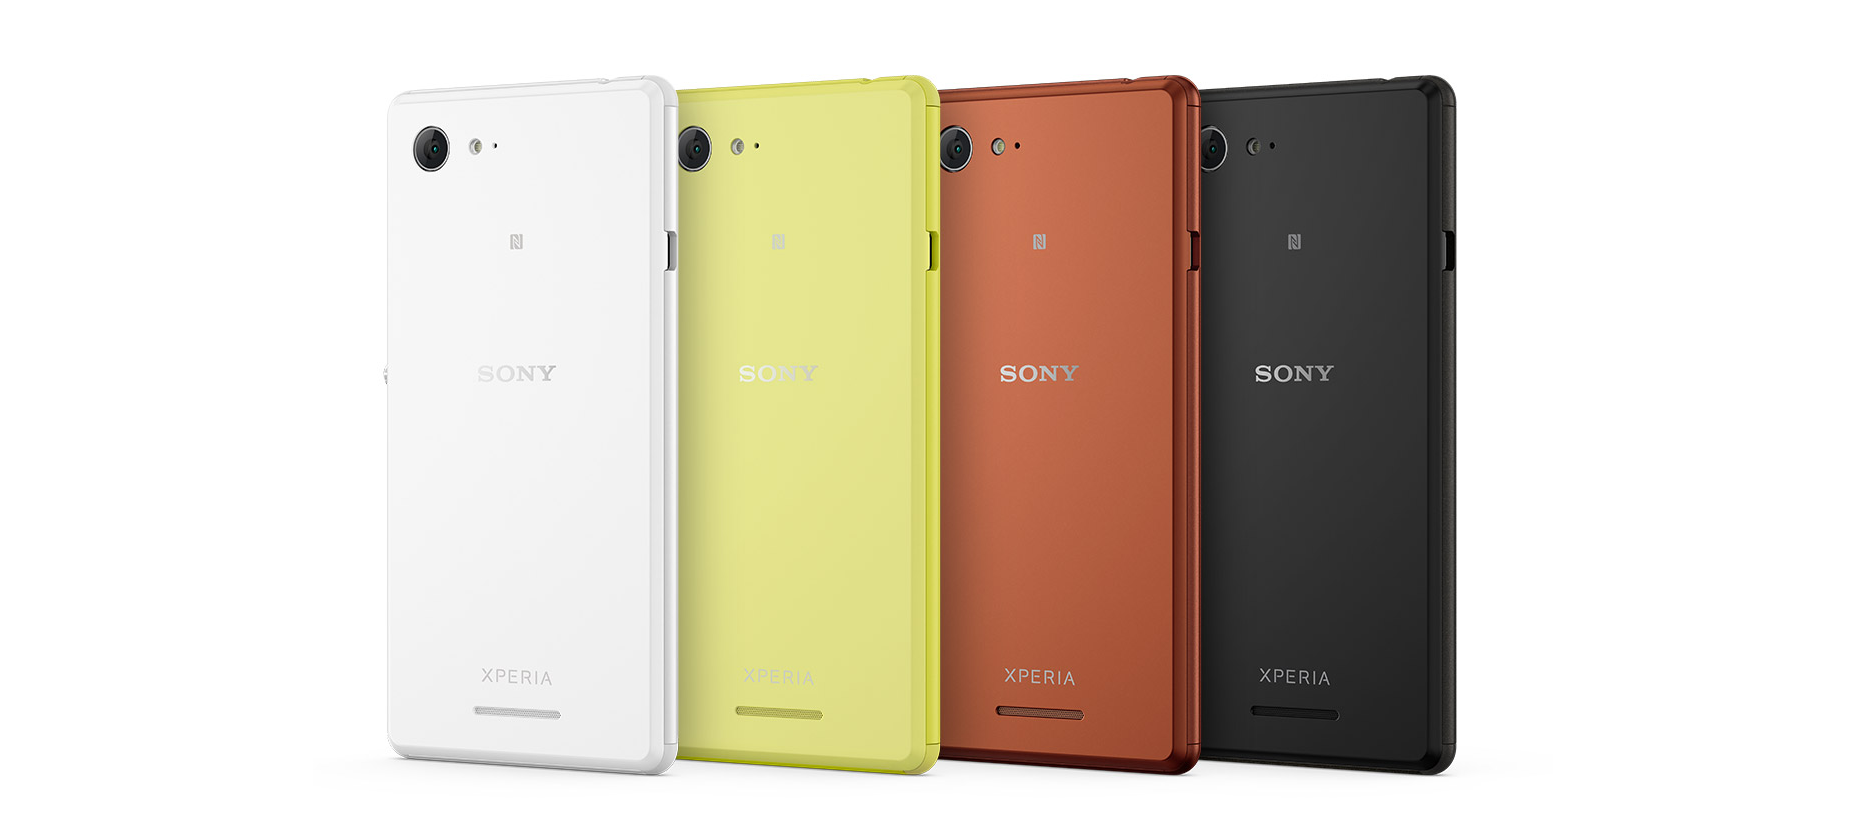 Sony Xperia e3 2212. Sony Xperia e3 Dual. Sony model d2212/Xperia e3 Dual. Sony Xperia e3 d2203. Sony updates